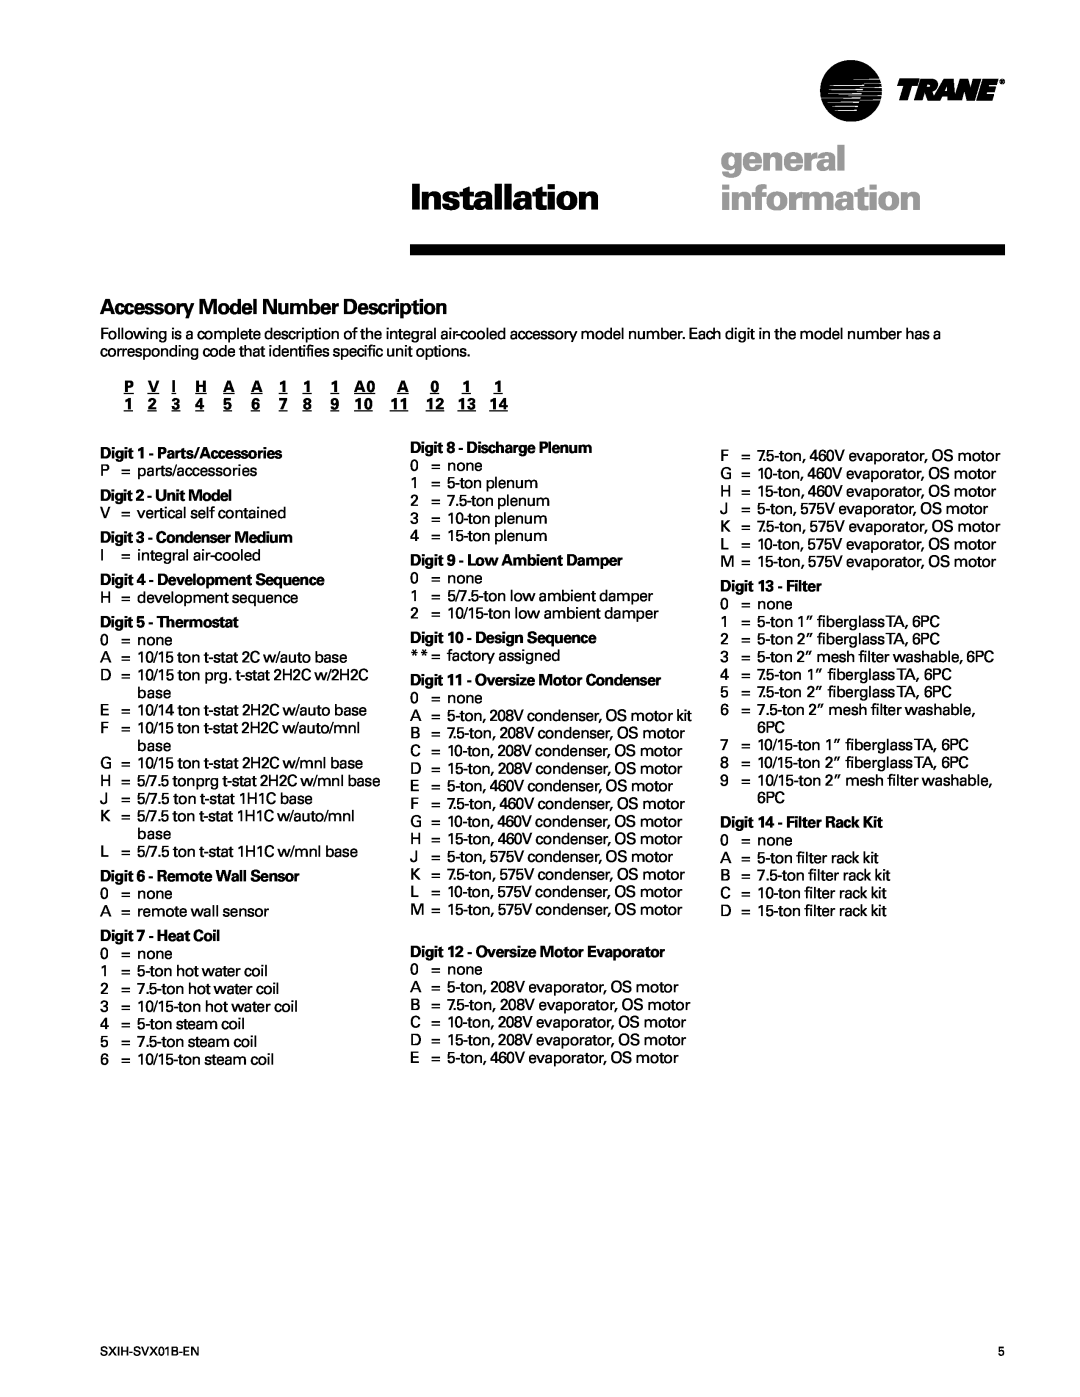 Trane SCIH manual Accessory Model Number Description, general, Installation information 